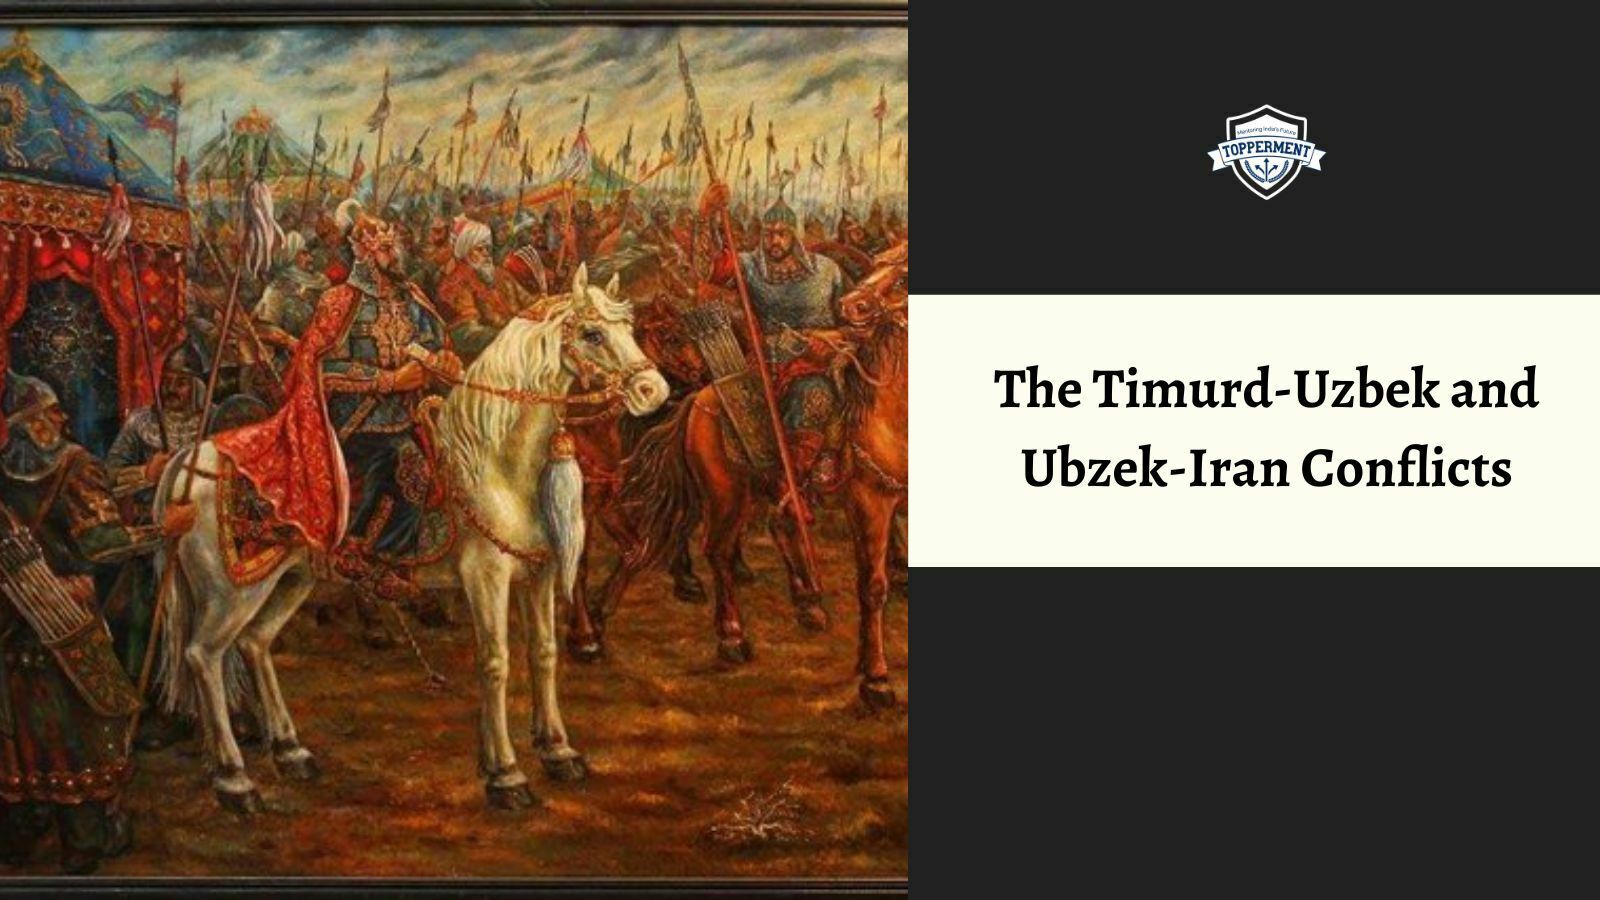 The Timurid-Uzbek and Uzbek-Iran conflicts-TopperMent